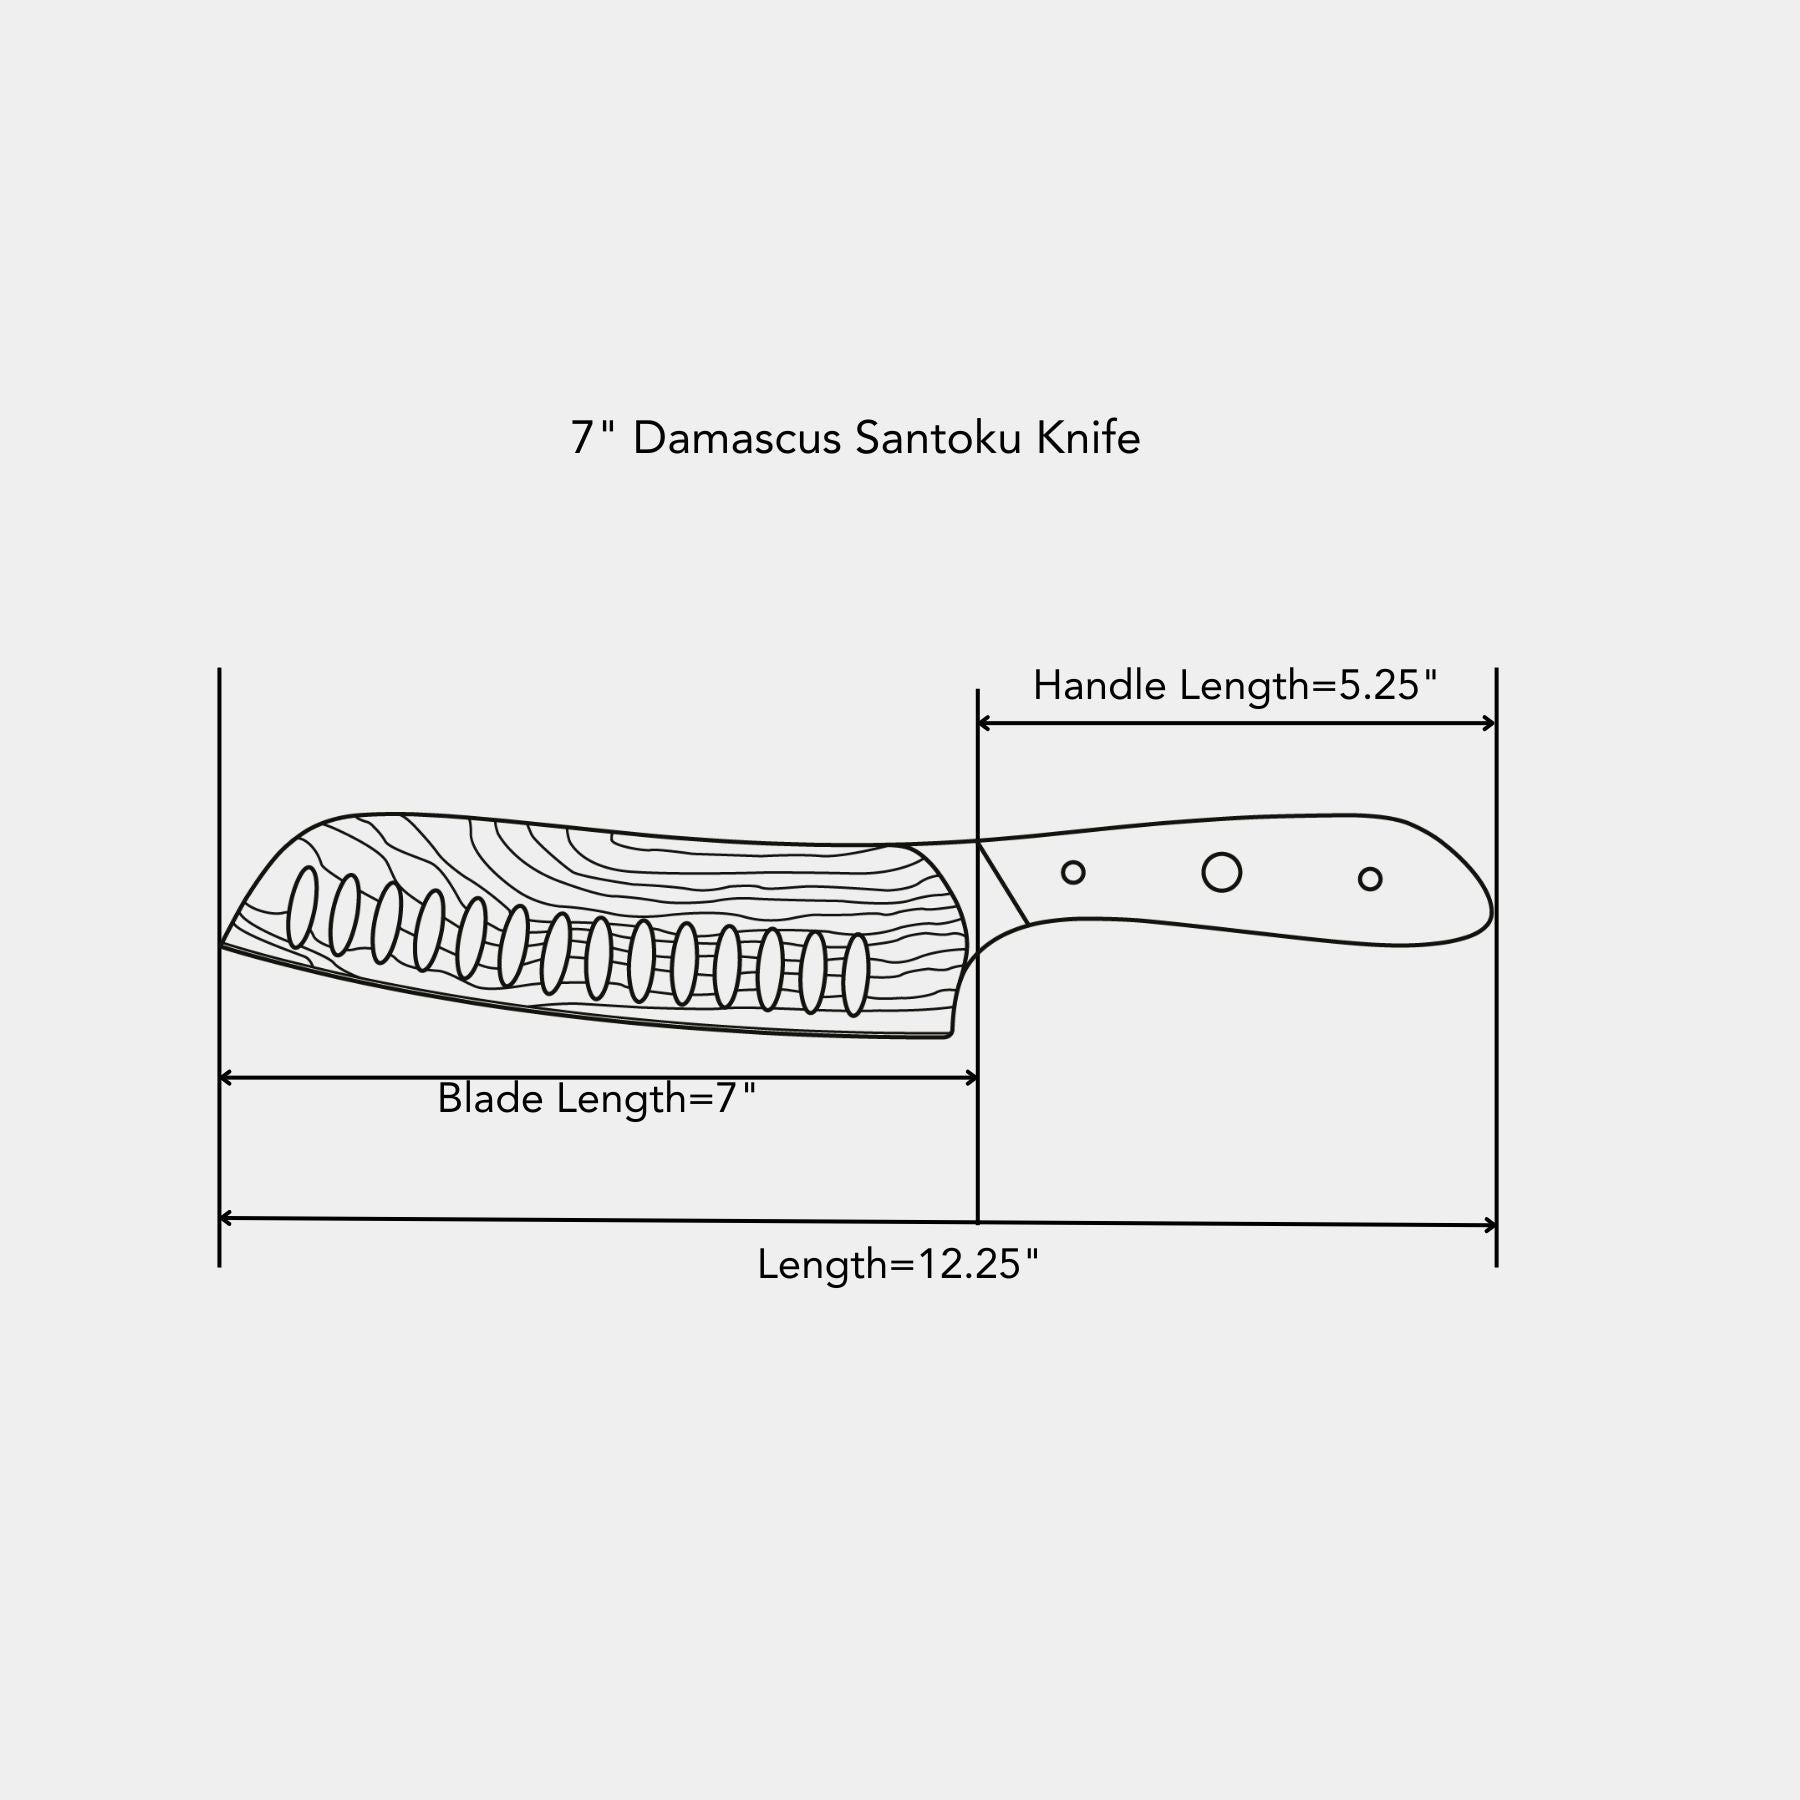 7" Damascus Santoku Knife dimensions of blade and handle length